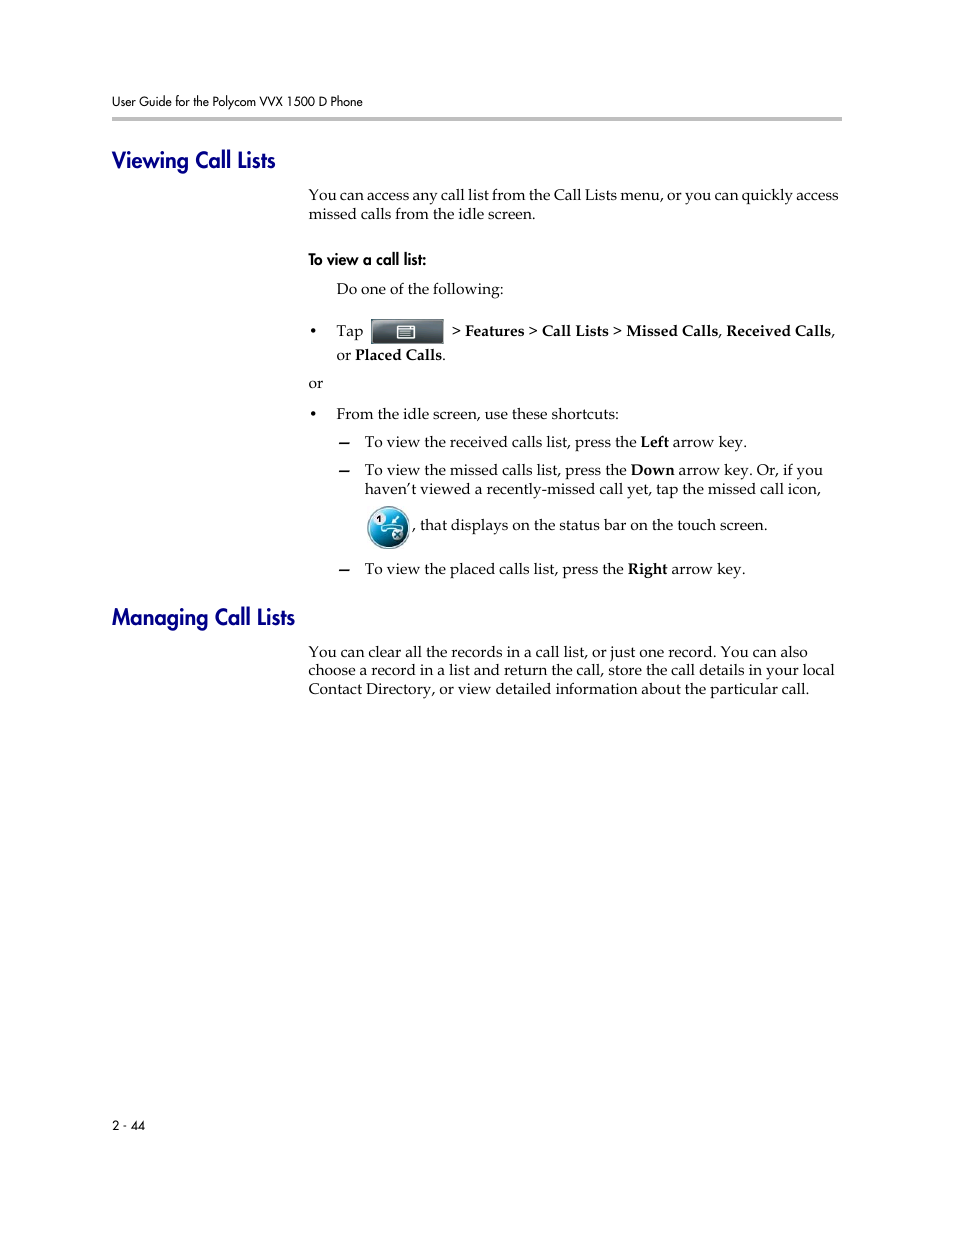 Viewing call lists, Managing call lists, Viewing call lists -44 managing call lists -44 | Polycom VVX 1500 D User Manual | Page 82 / 210